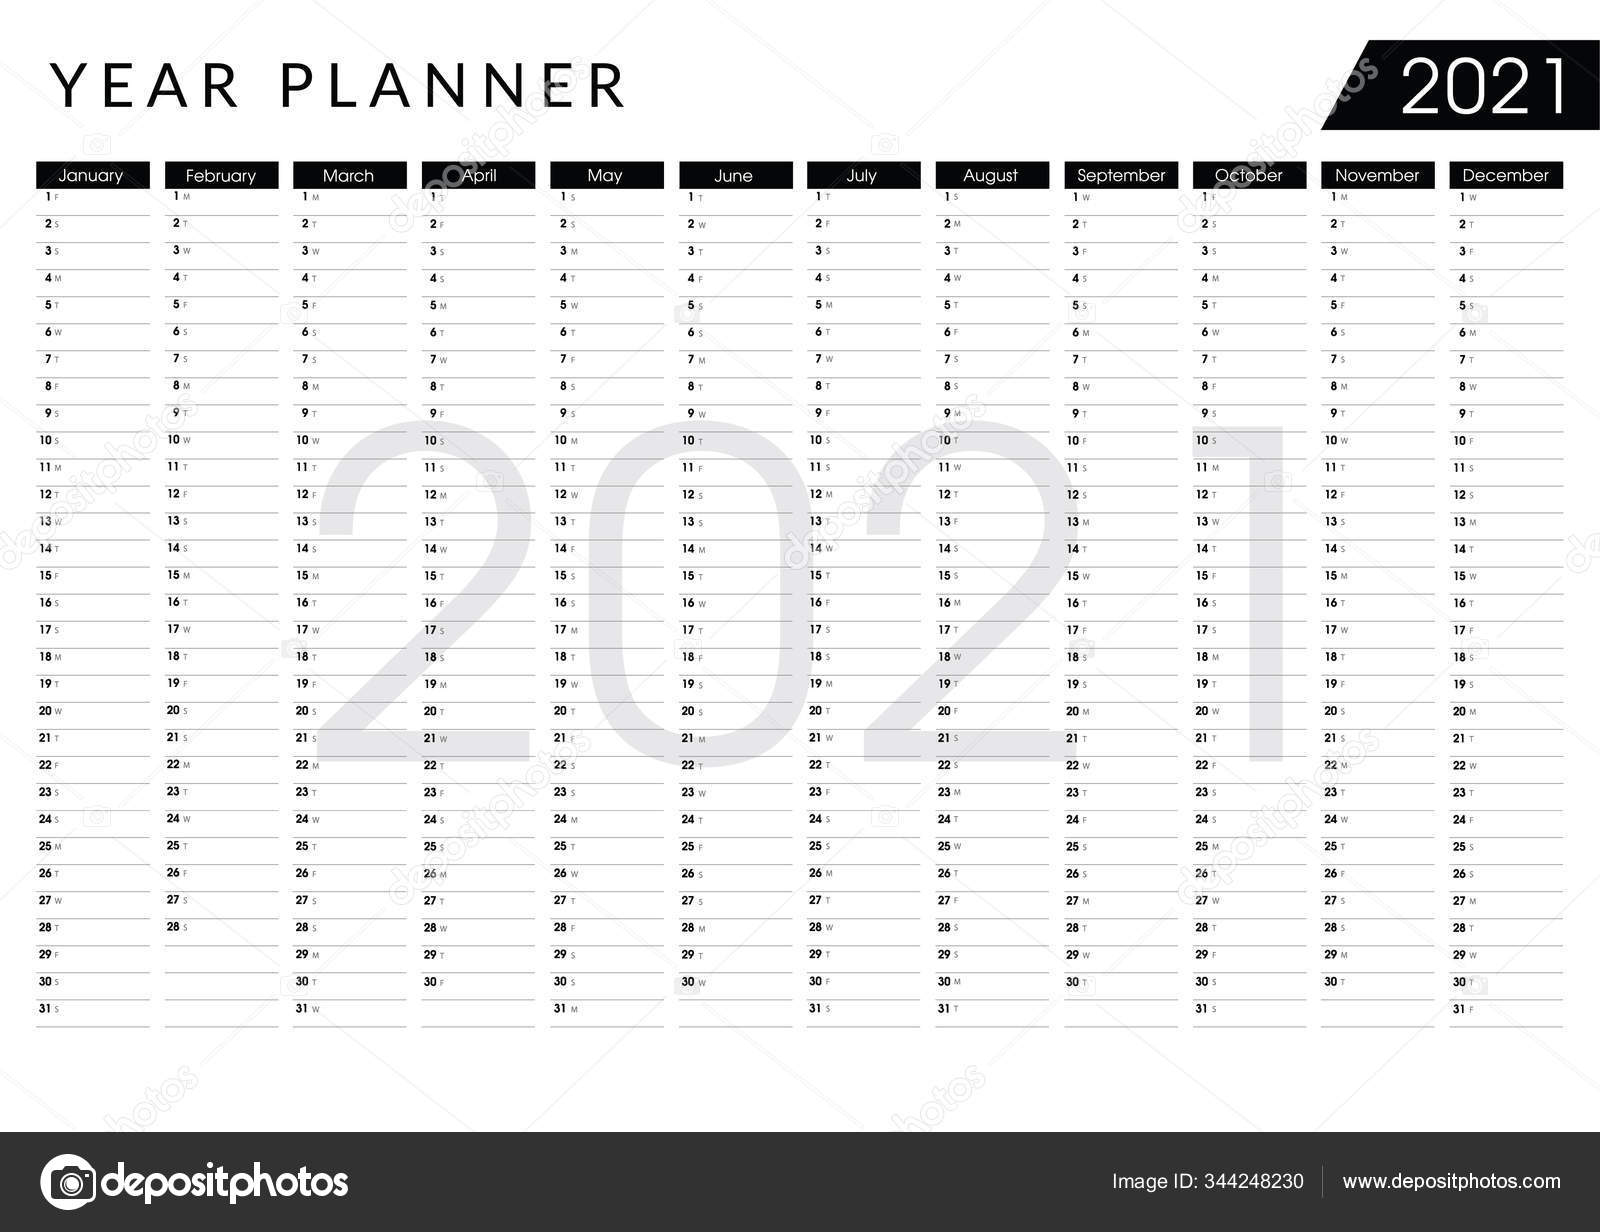 2021 Year Planner Wall Calendar Design Template Horizontal Annual Worldwide Vector Image By C Darina Wk Gmail Com Vector Stock 344248230